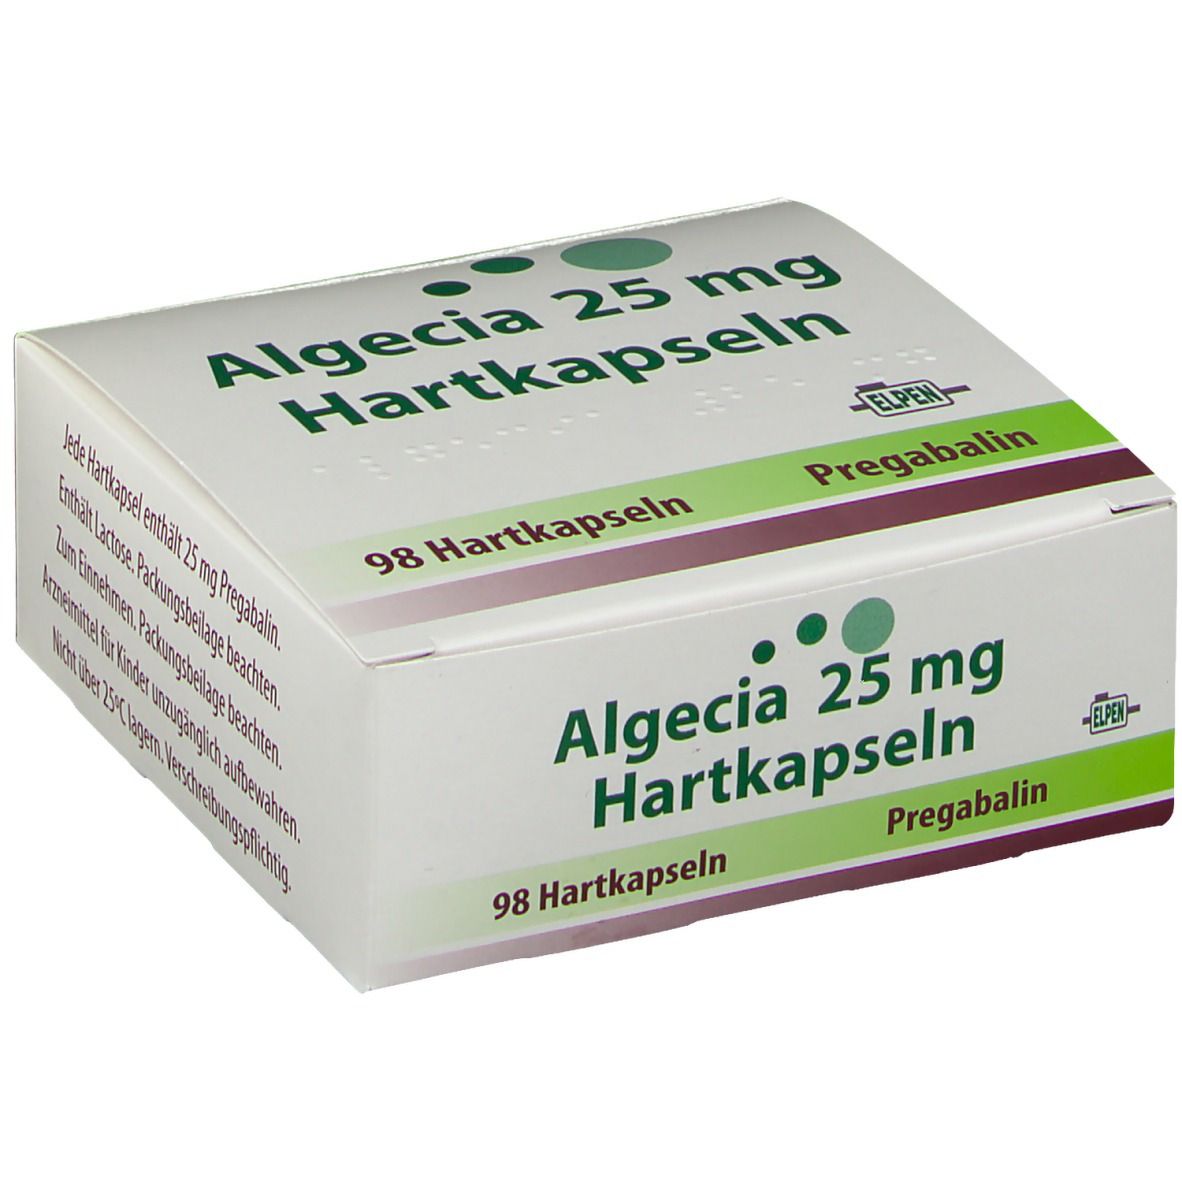 Algecia 25 mg